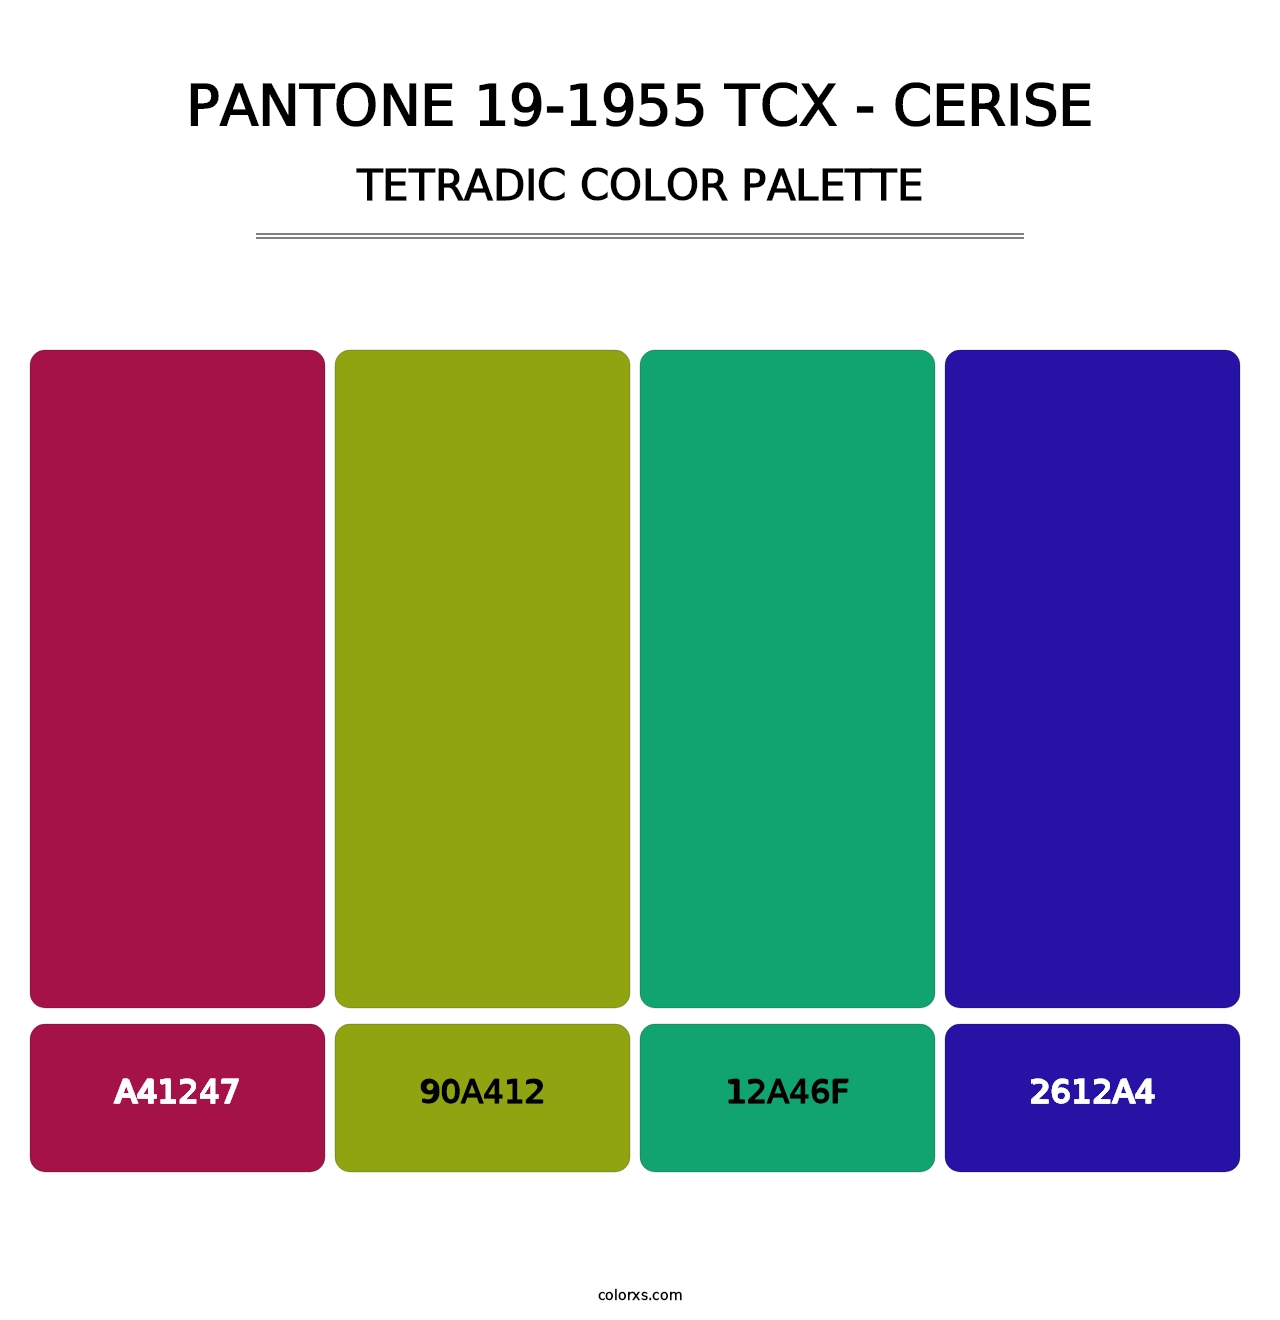 PANTONE 19-1955 TCX - Cerise - Tetradic Color Palette